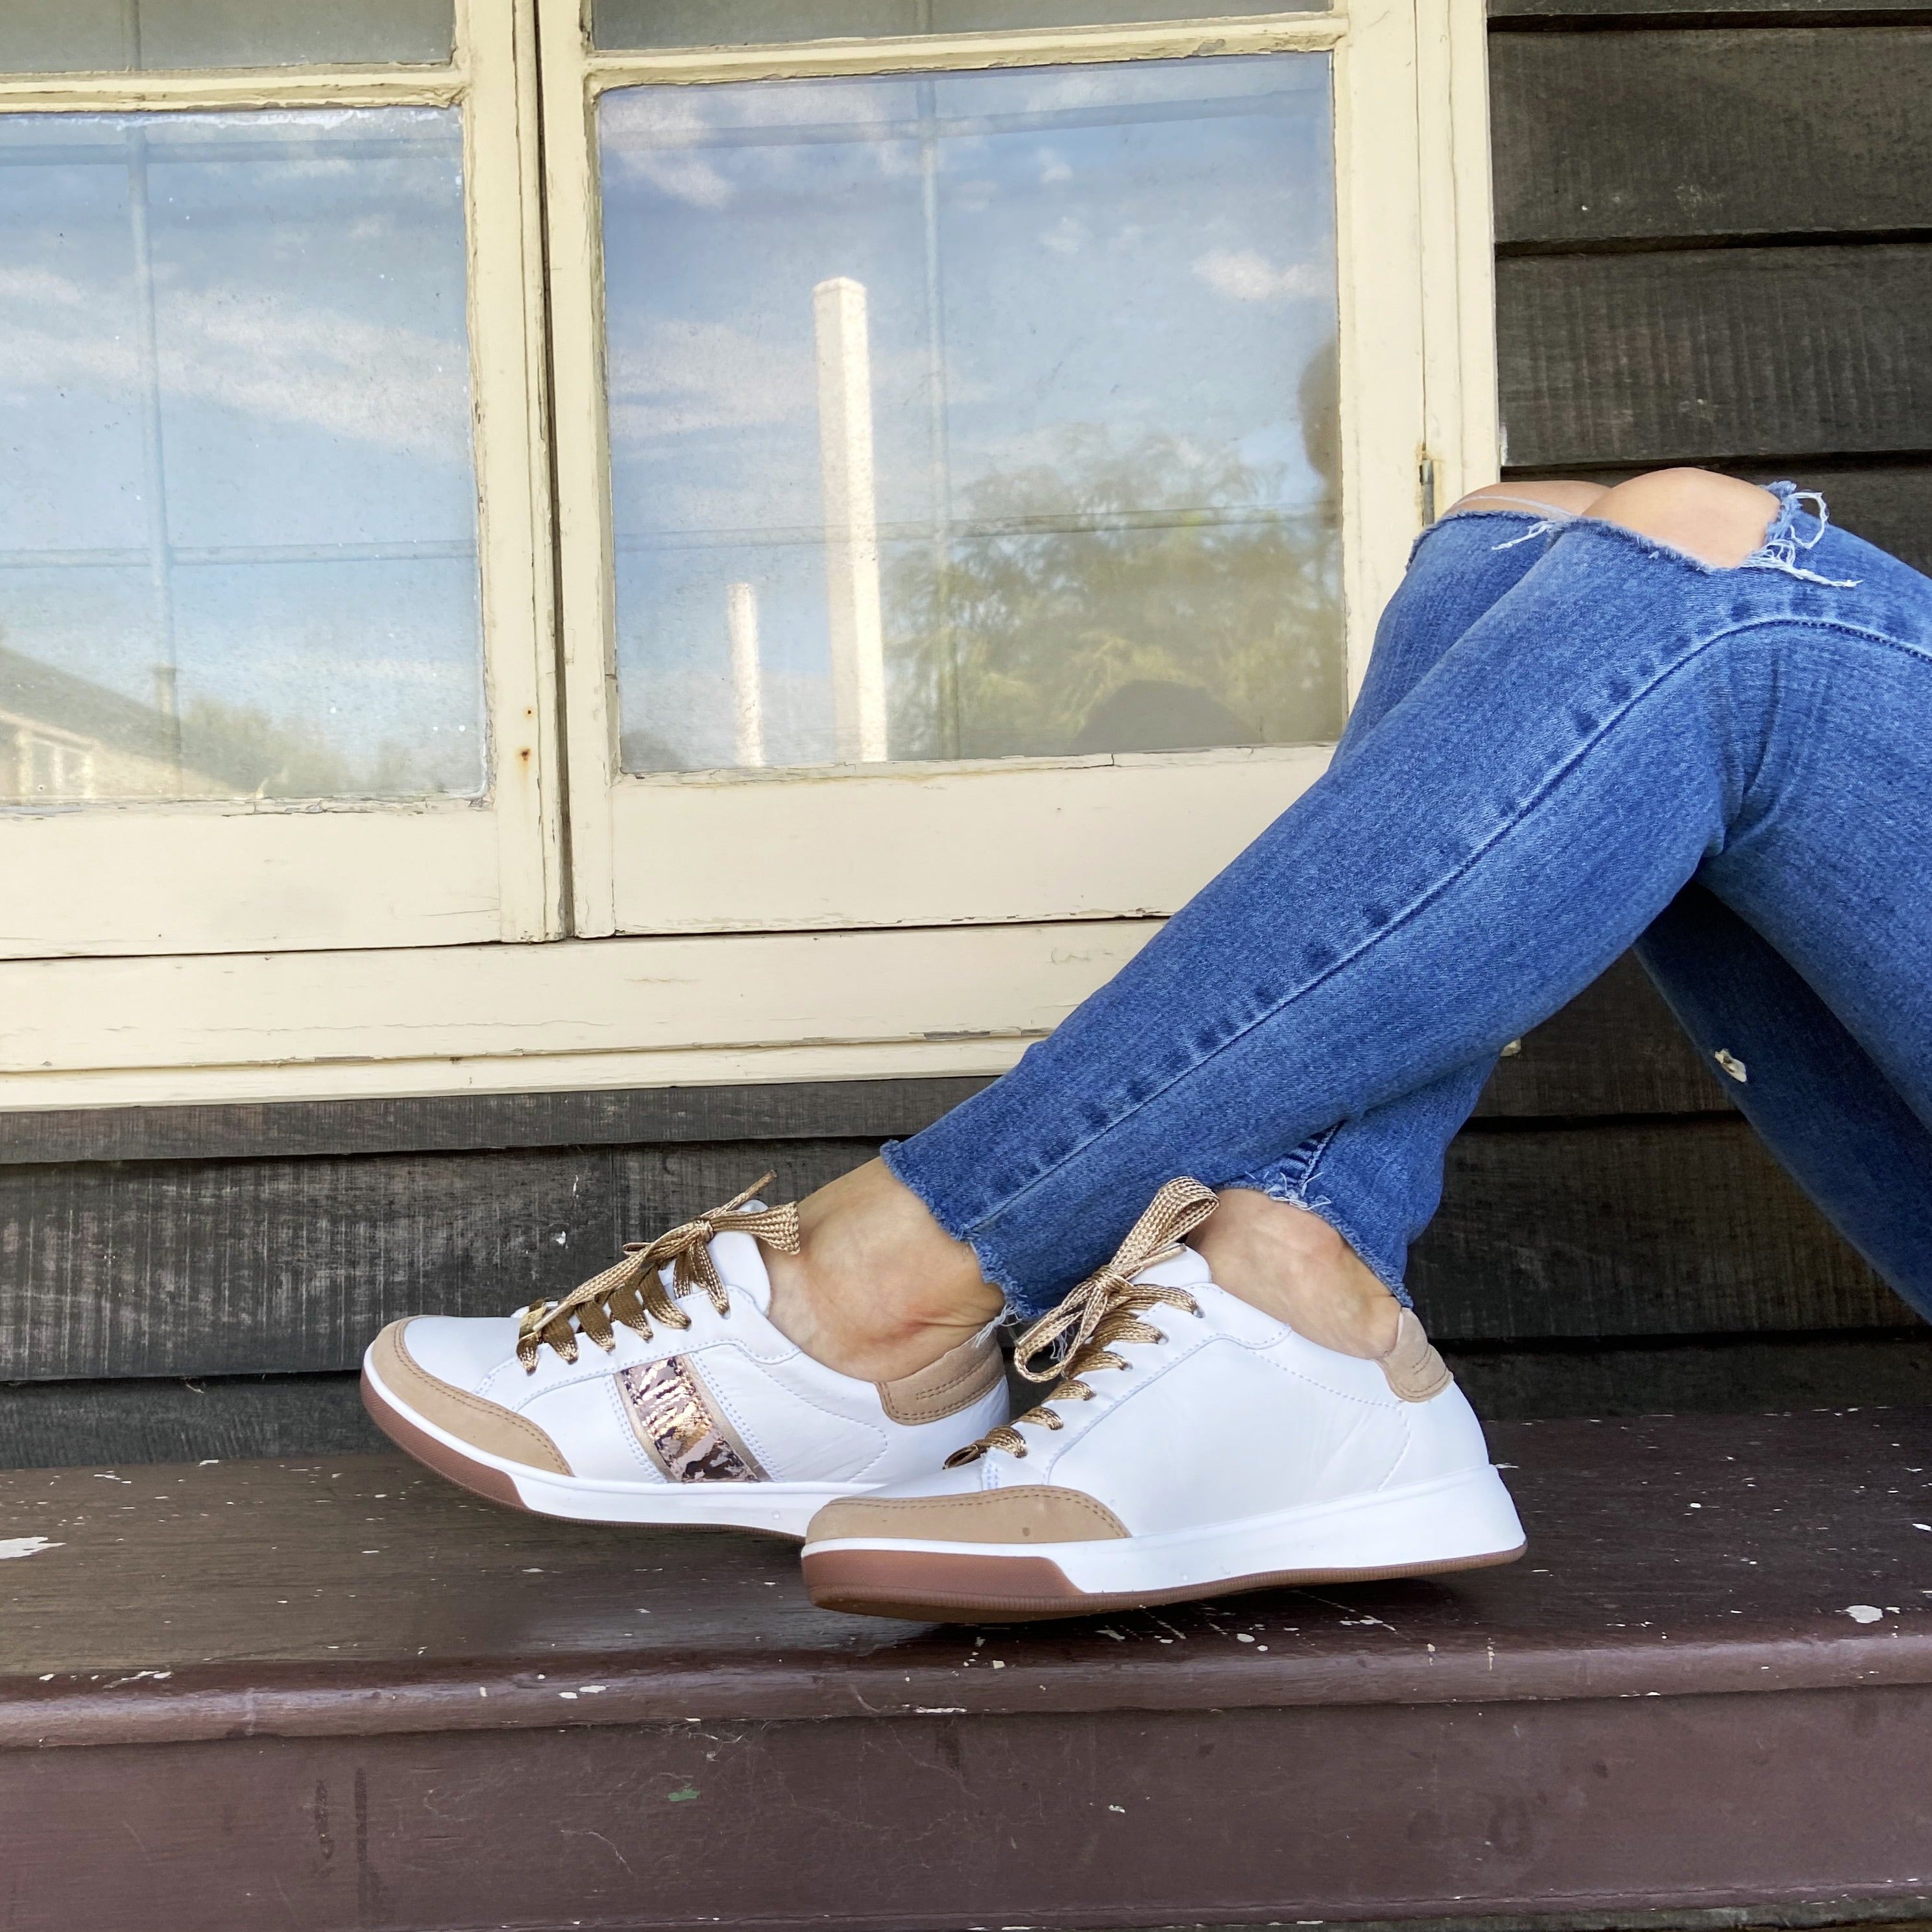 Kreunt Denk vooruit Verslaafd Ara Rom-High Soft White Gold Sneakers | Free Shipping – Bstore